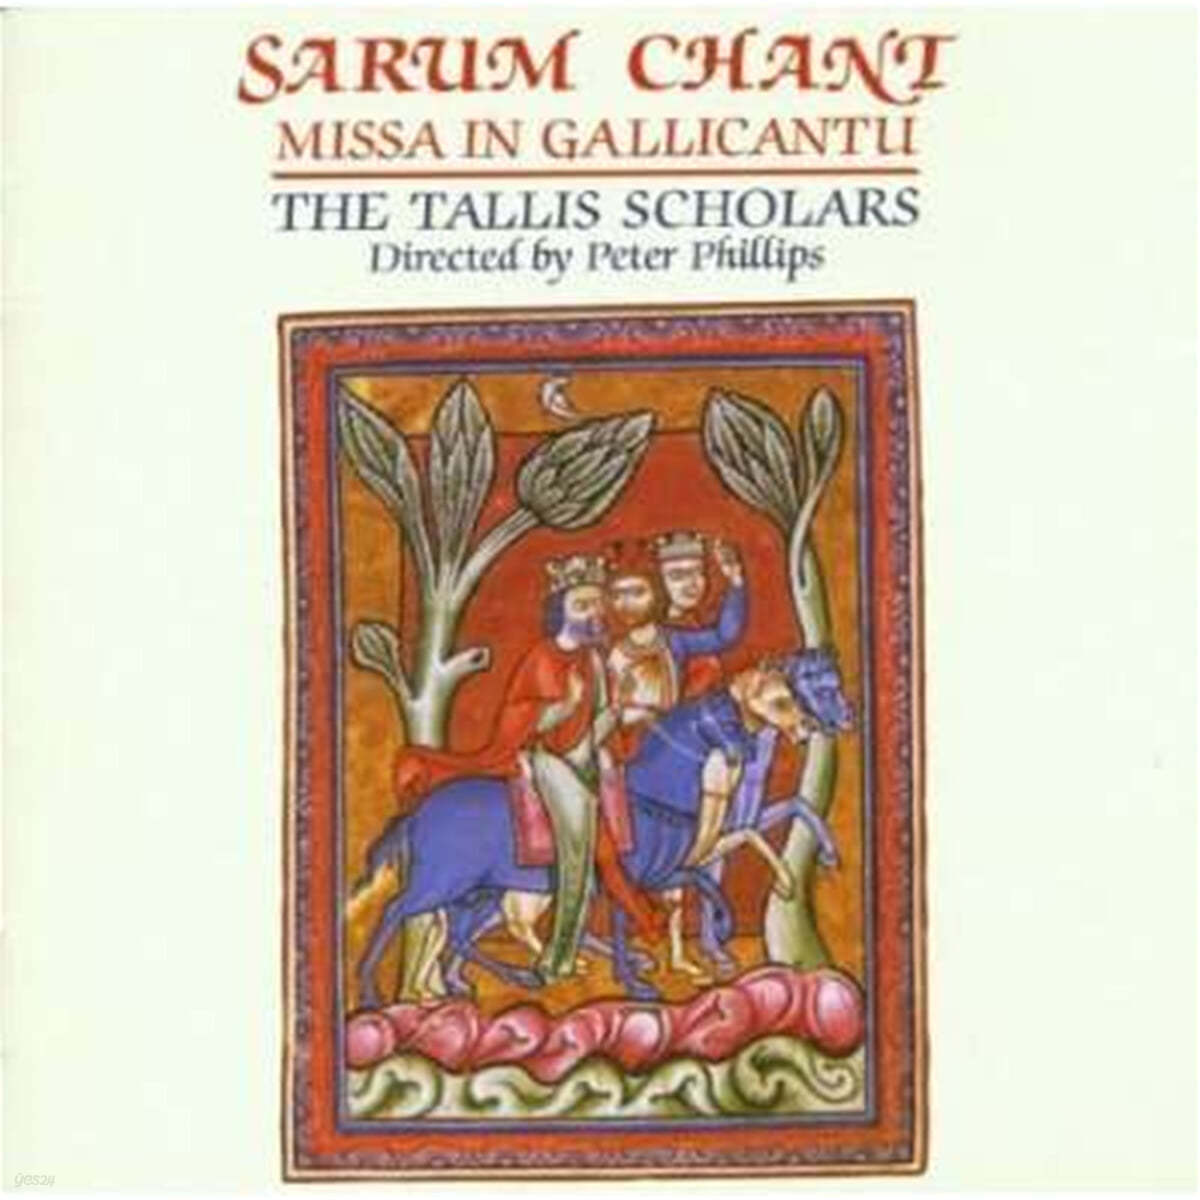 The Tallis Scholars 사룸 찬트 - 갈리칸투의 미사 (Sacrum Chant - Missa In Gallicantli) 